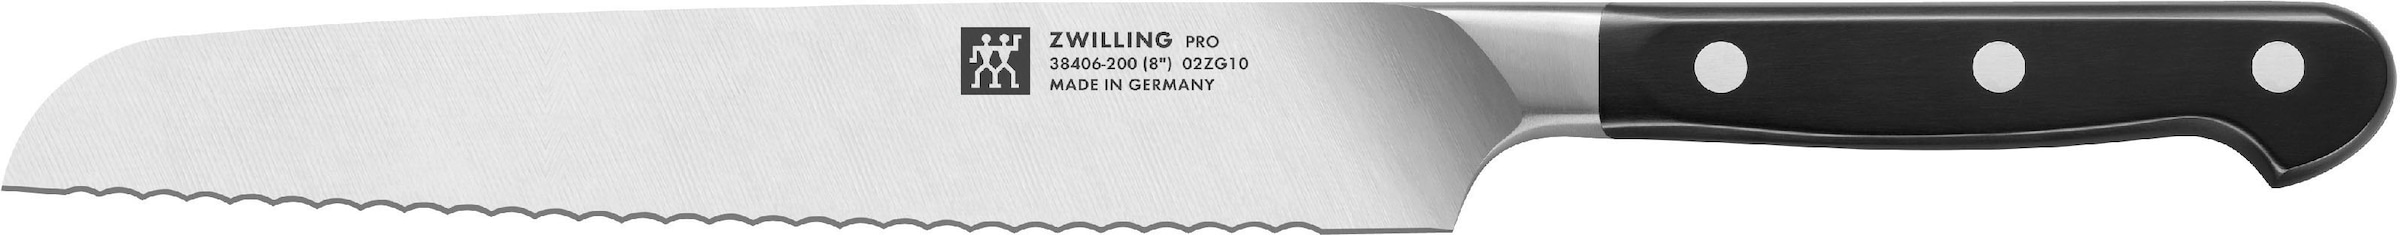 Zwilling Brotmesser »Pro«, (1 tlg.), Klingenlänge 20 cm